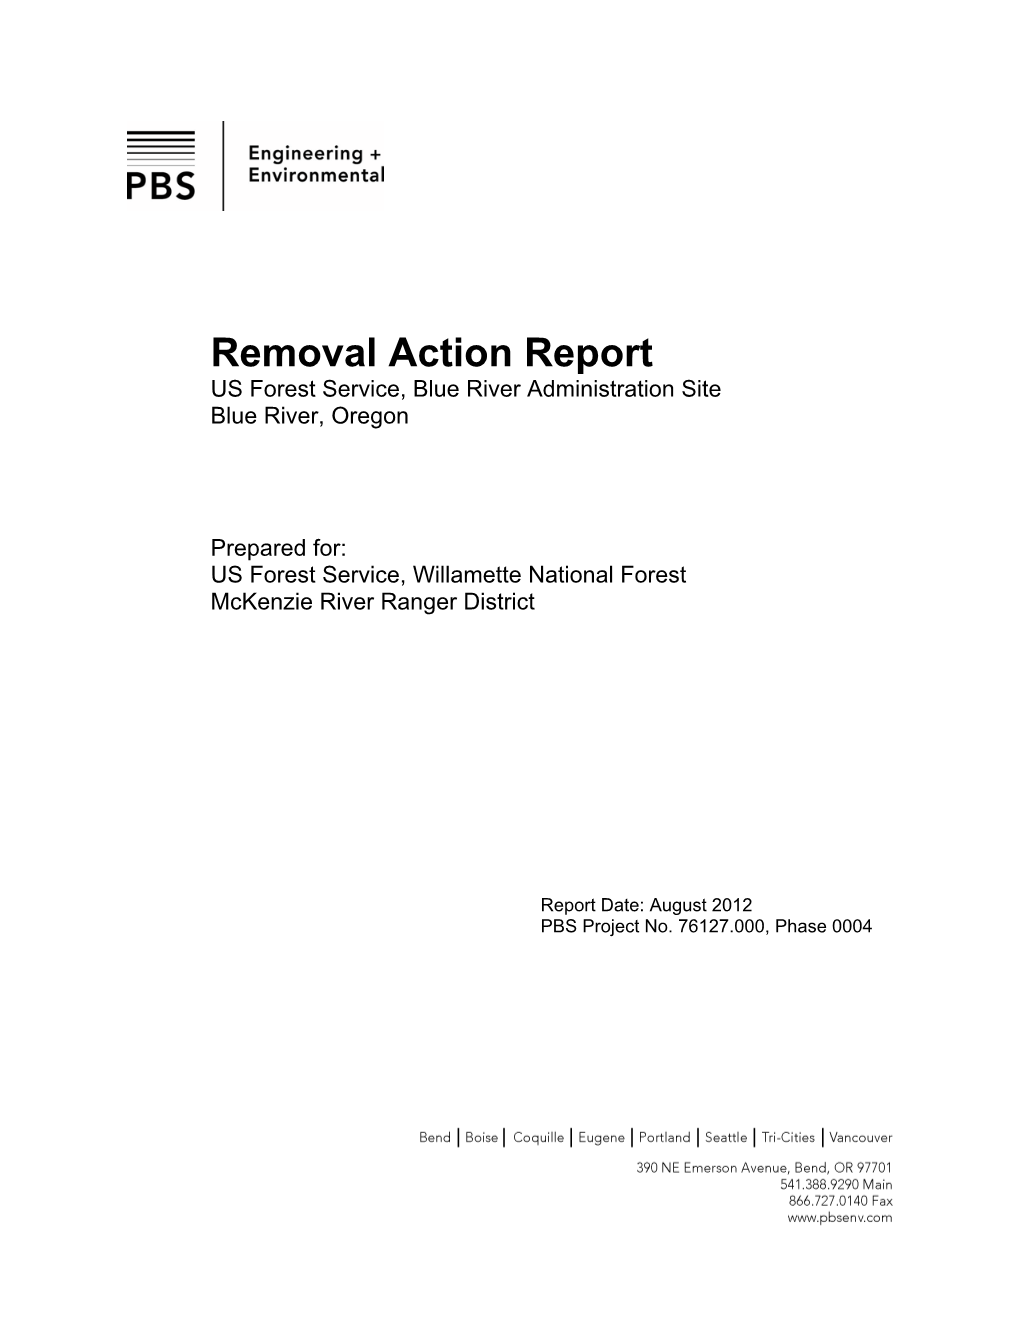 Removal Action Report US Forest Service, Blue River Administration Site Blue River, Oregon